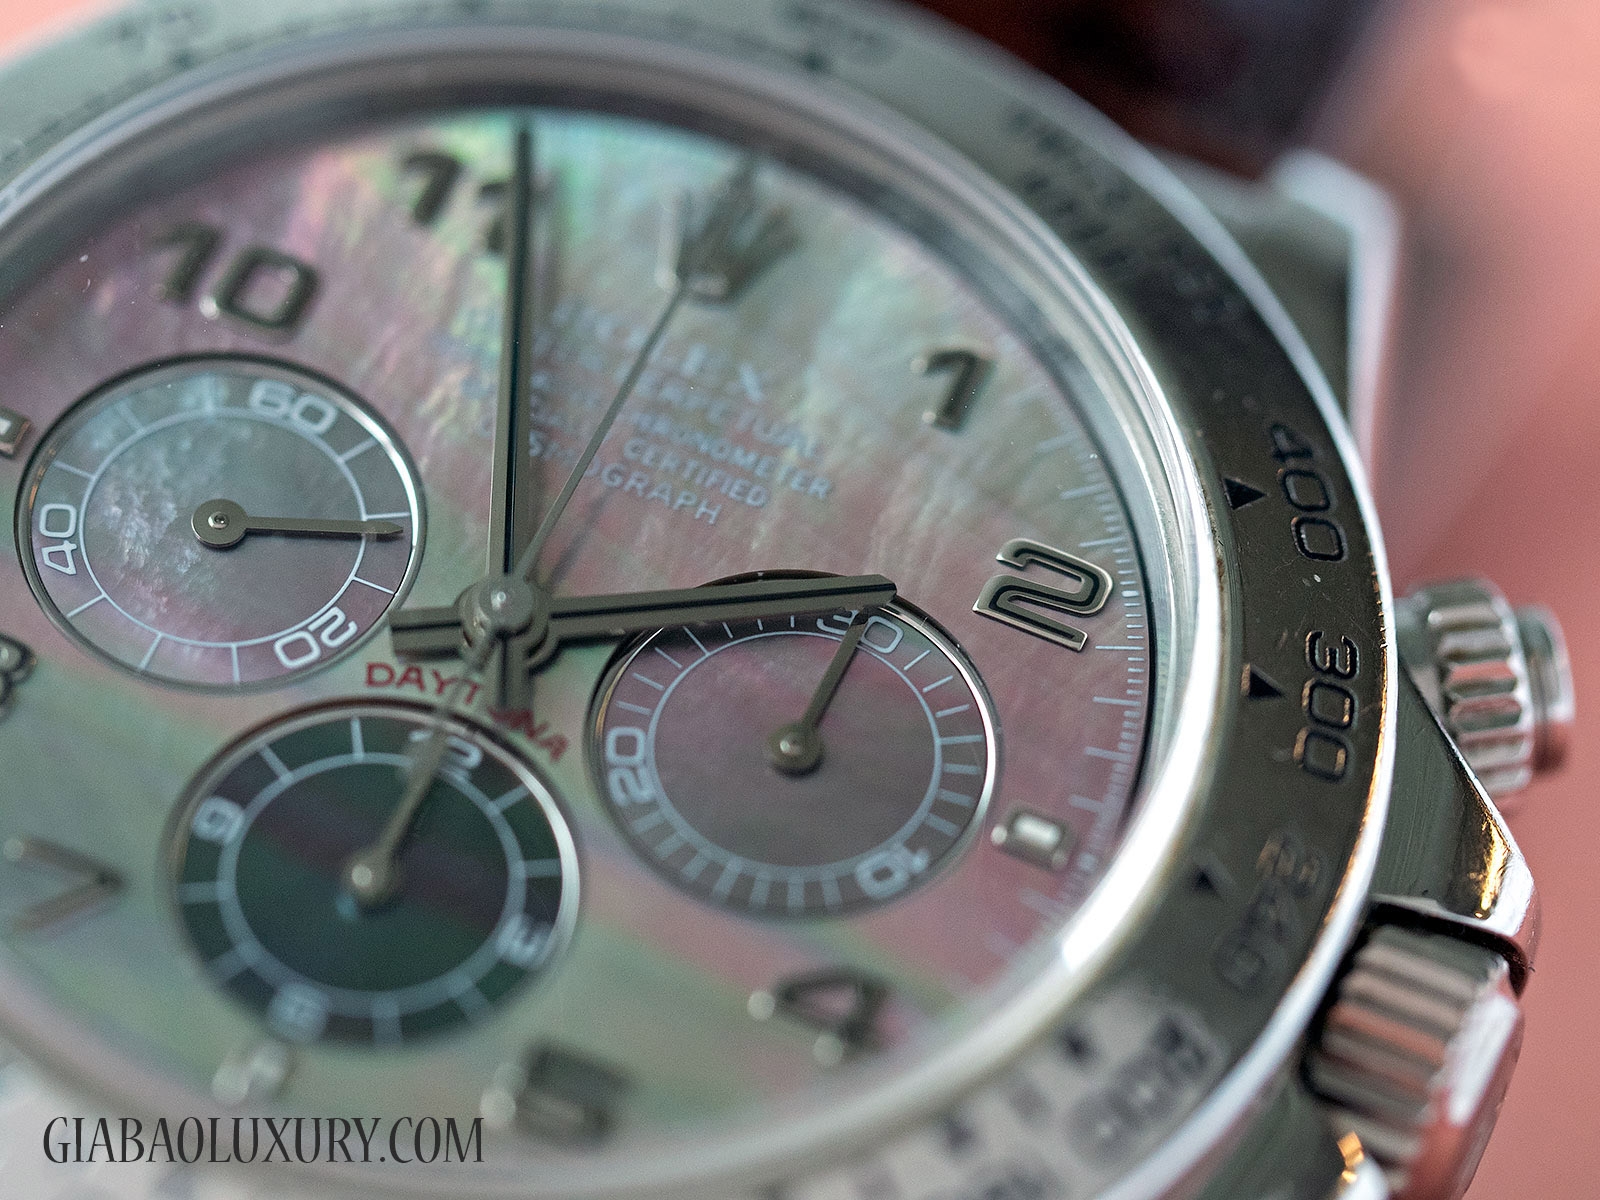 Đồng hồ Rolex Daytona 16516